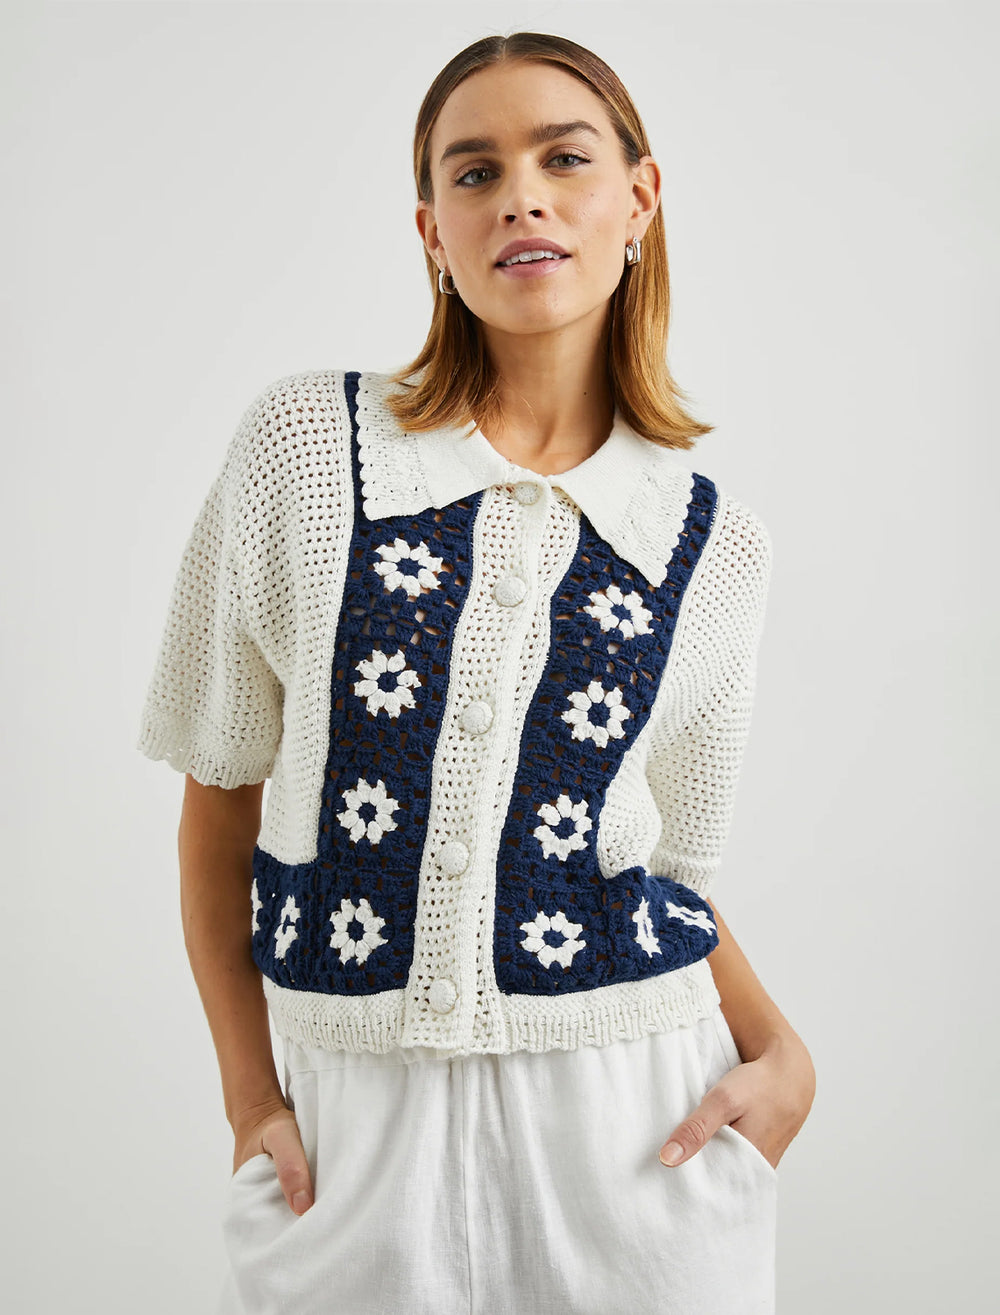 Model wearing Rails' milan crochet daisy top in navy and cream.